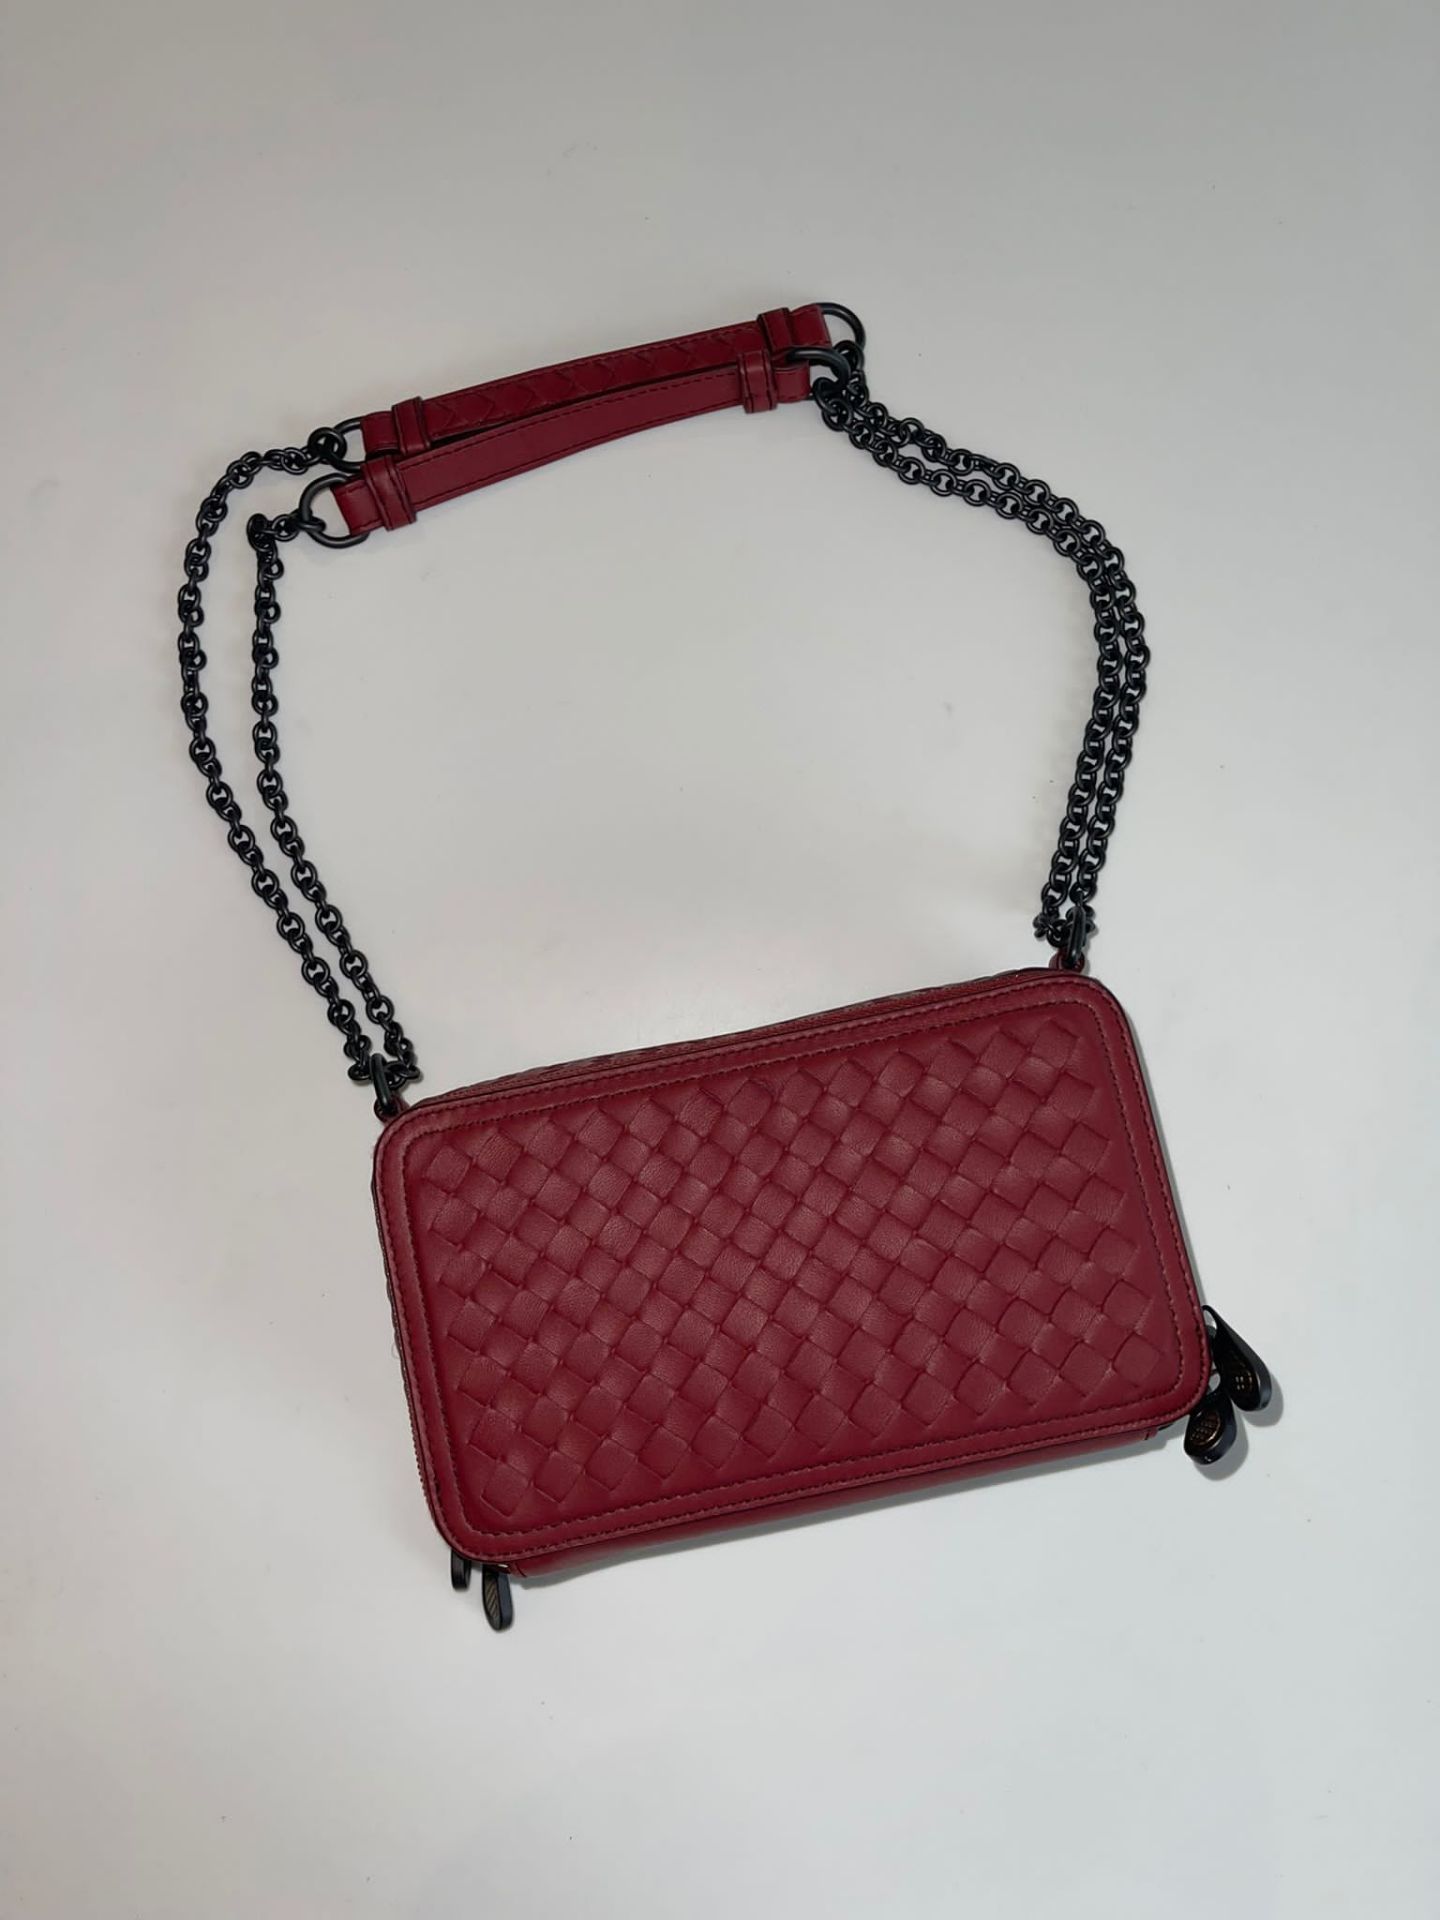 Bottega Veneta Intrecciato weave Shoulder Bag. RRP £2,230. Stylish, luxury & a stand out piece